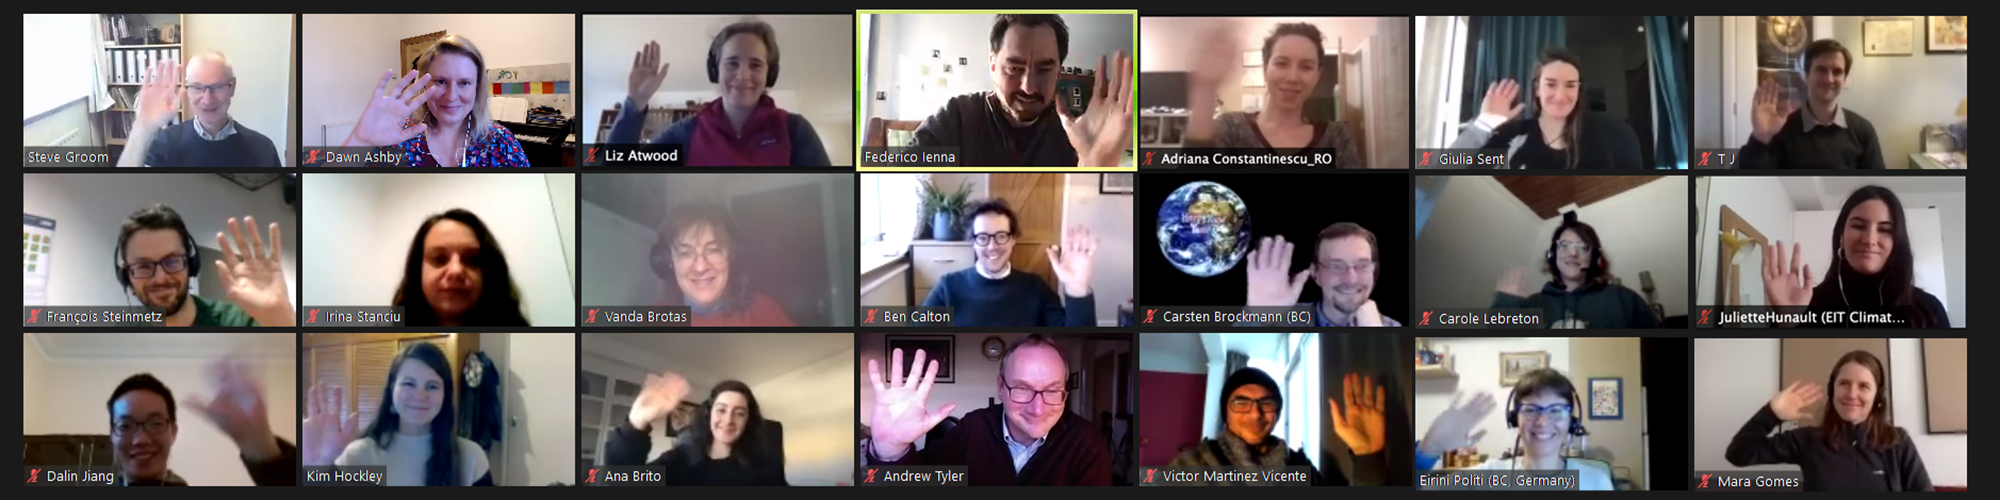 Screenshot of online meeting